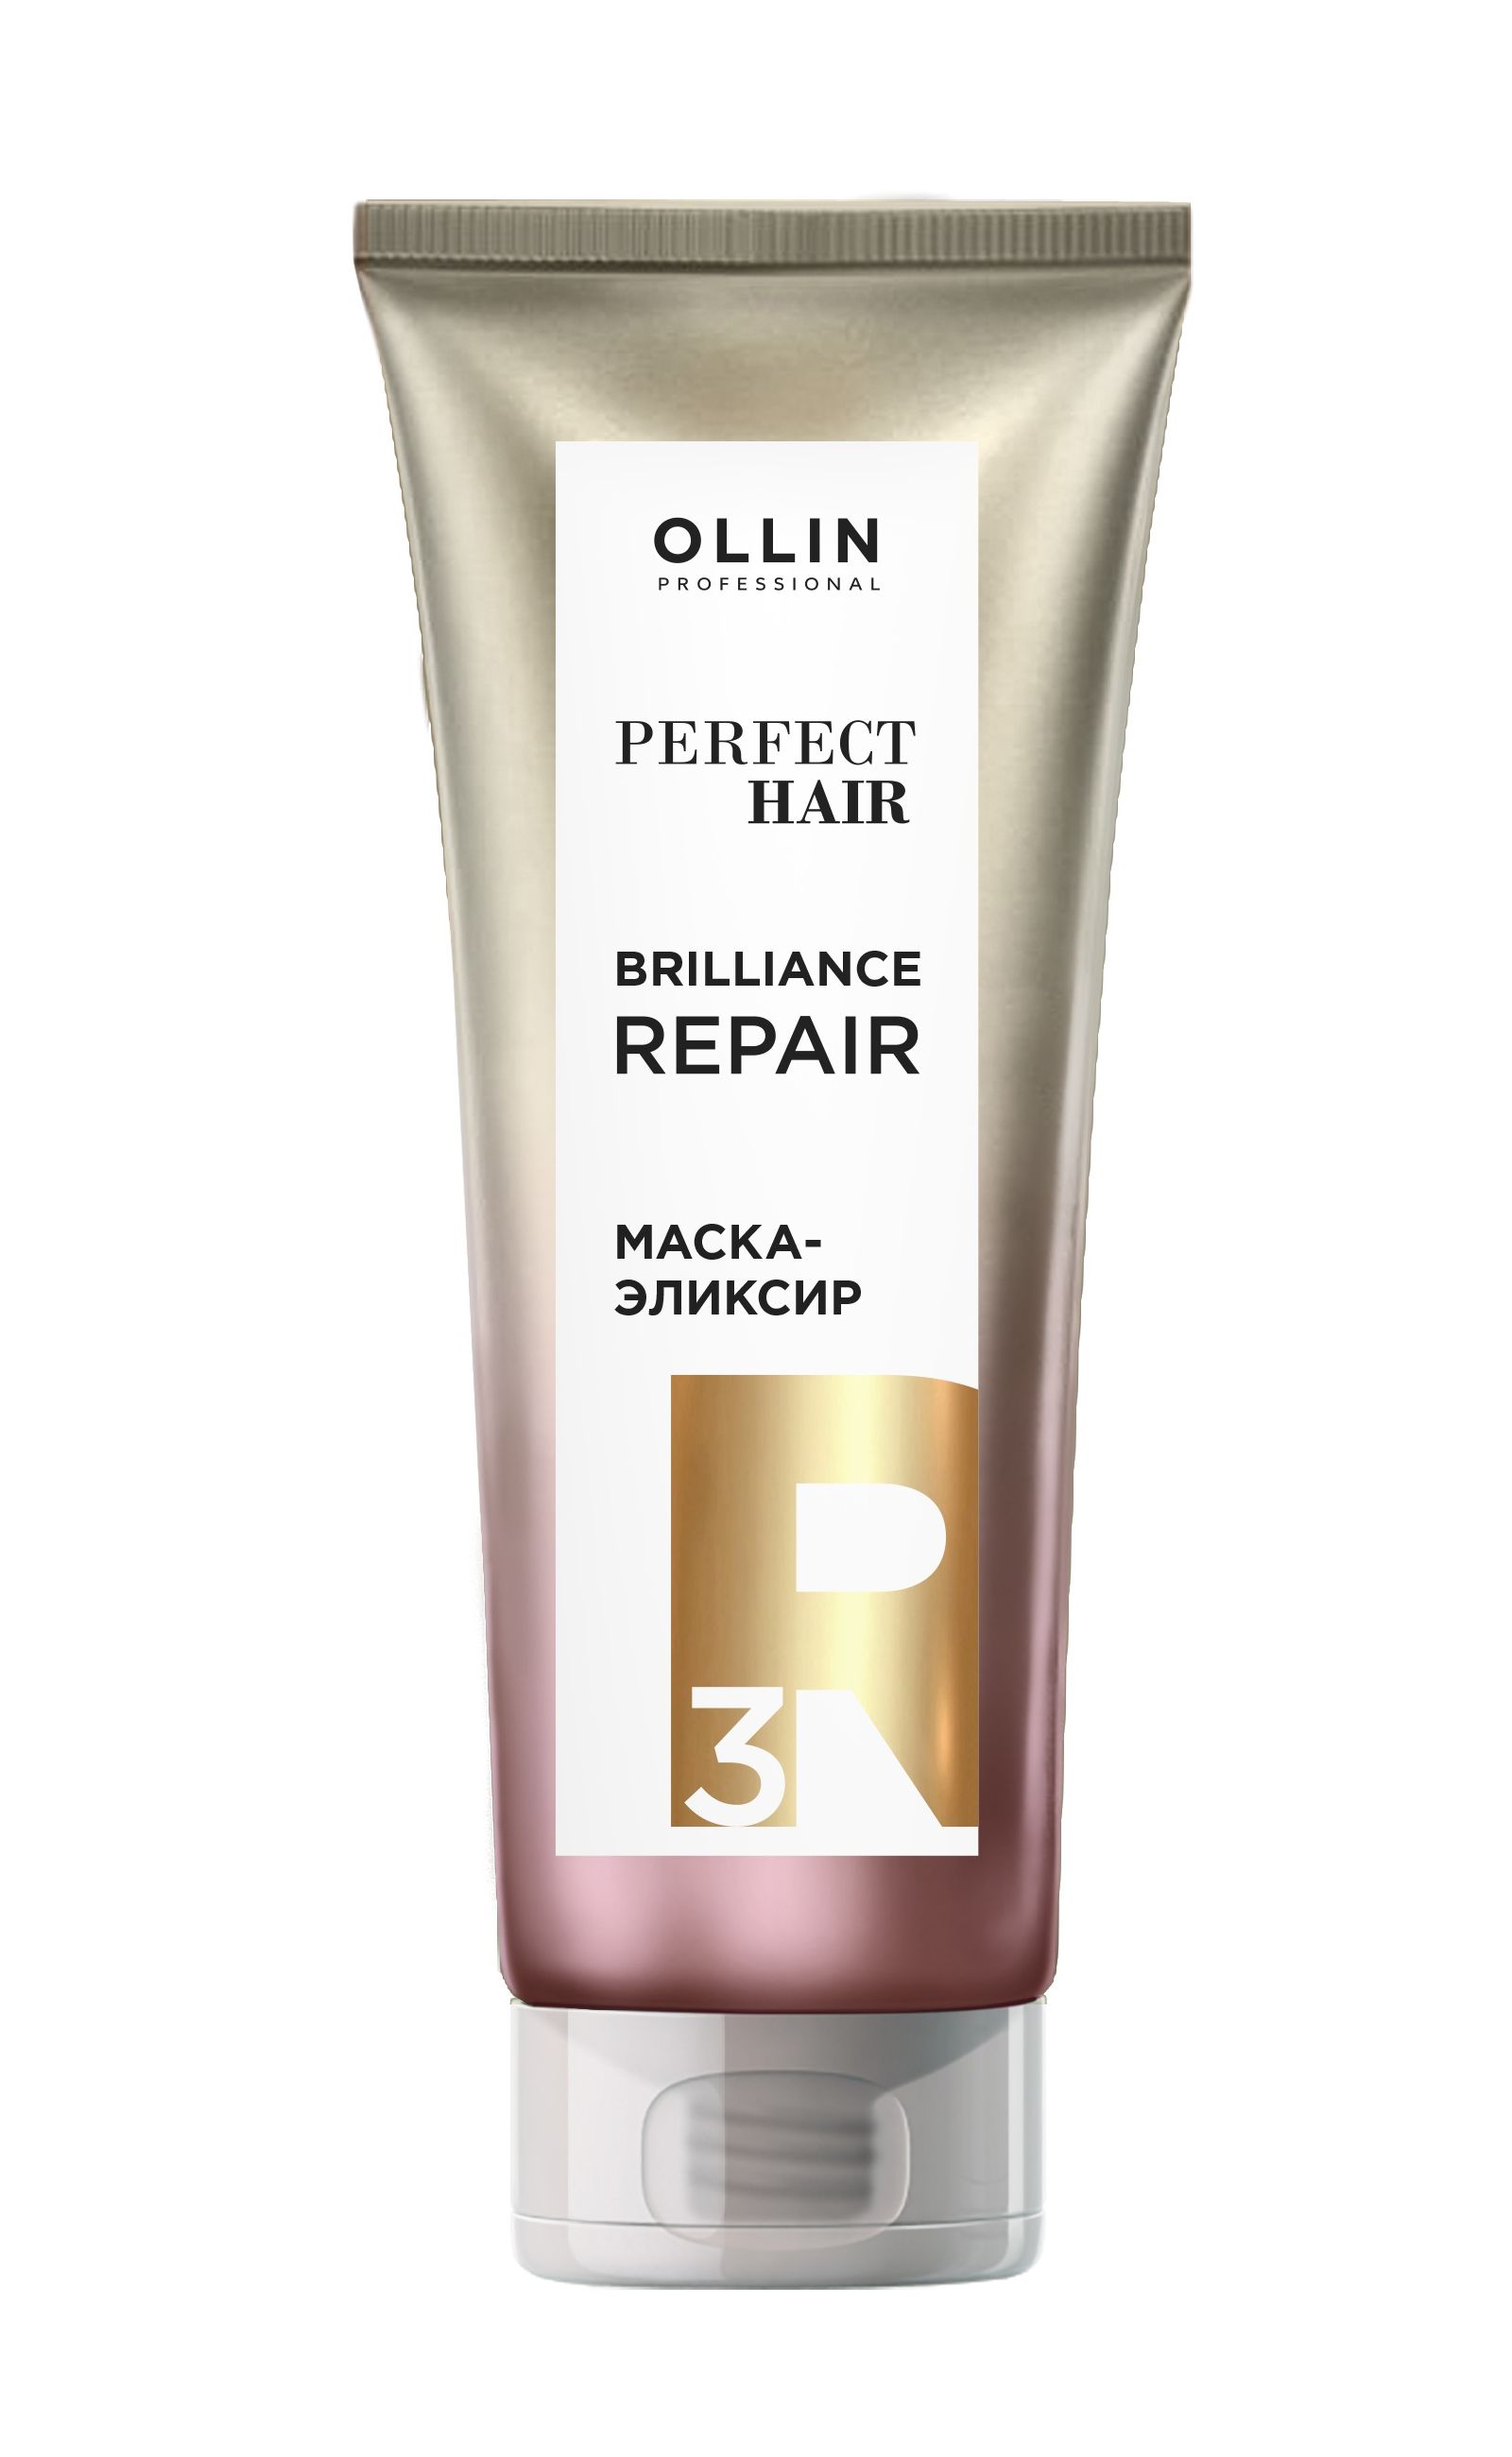 Ollin, Маска-эликсир. Закрепляющий этап «Brilliance Repair 3» серии «Perfect Hair», Фото интернет-магазин Премиум-Косметика.РФ